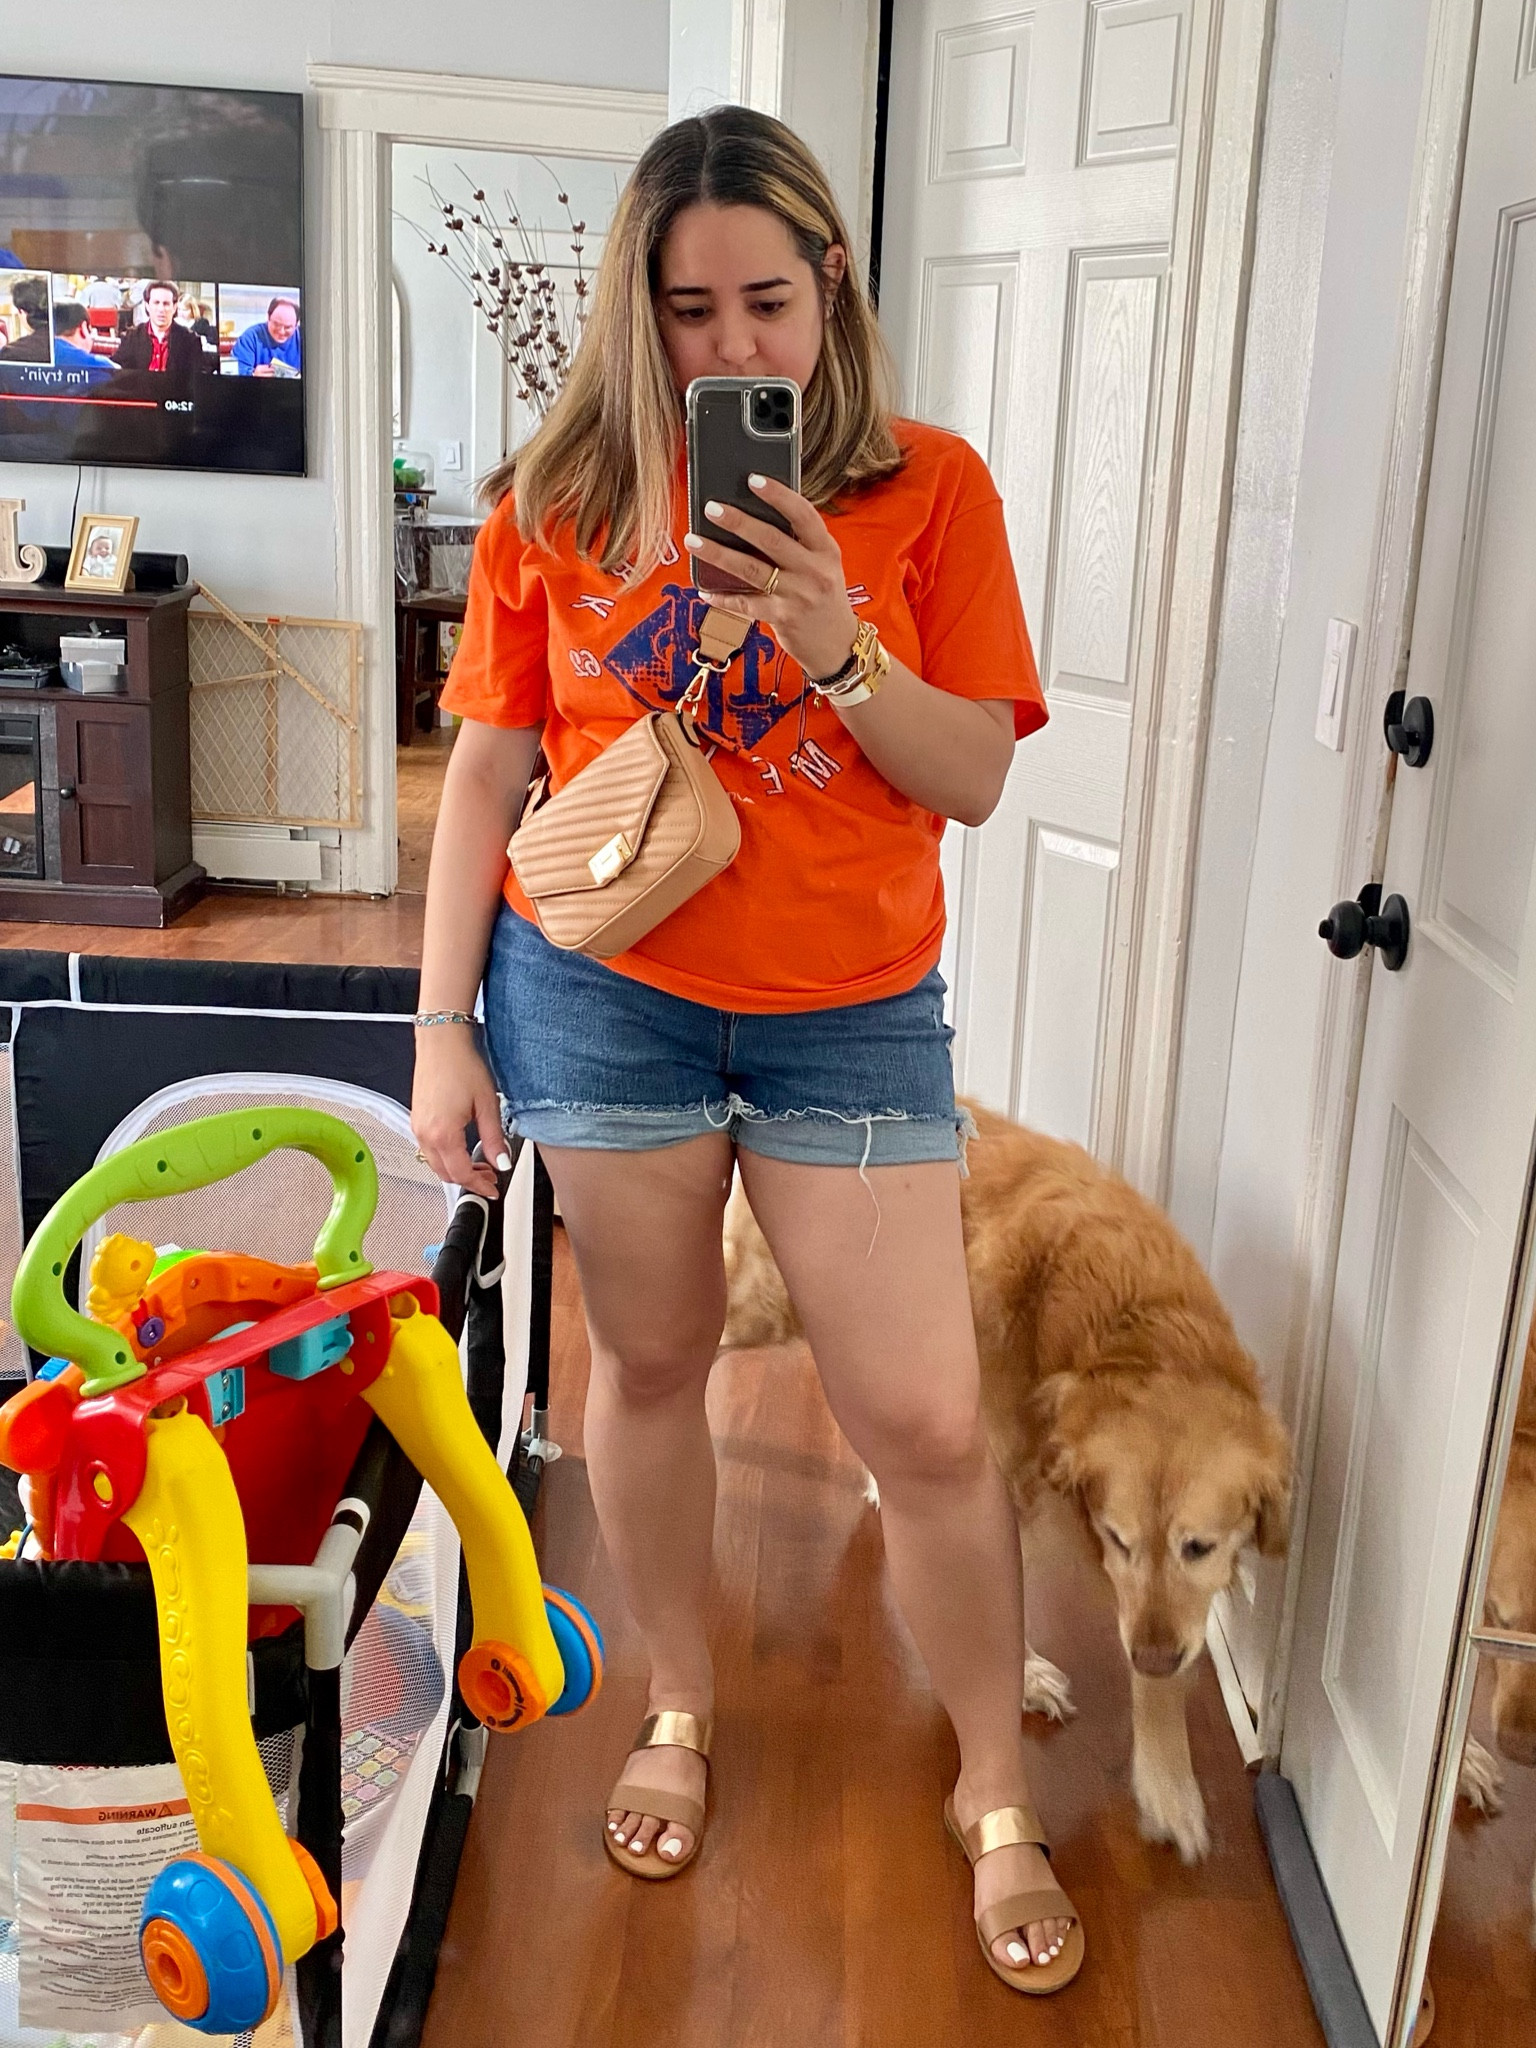 Men's Fanatics Branded Orange New York Mets Sweep T-Shirt 